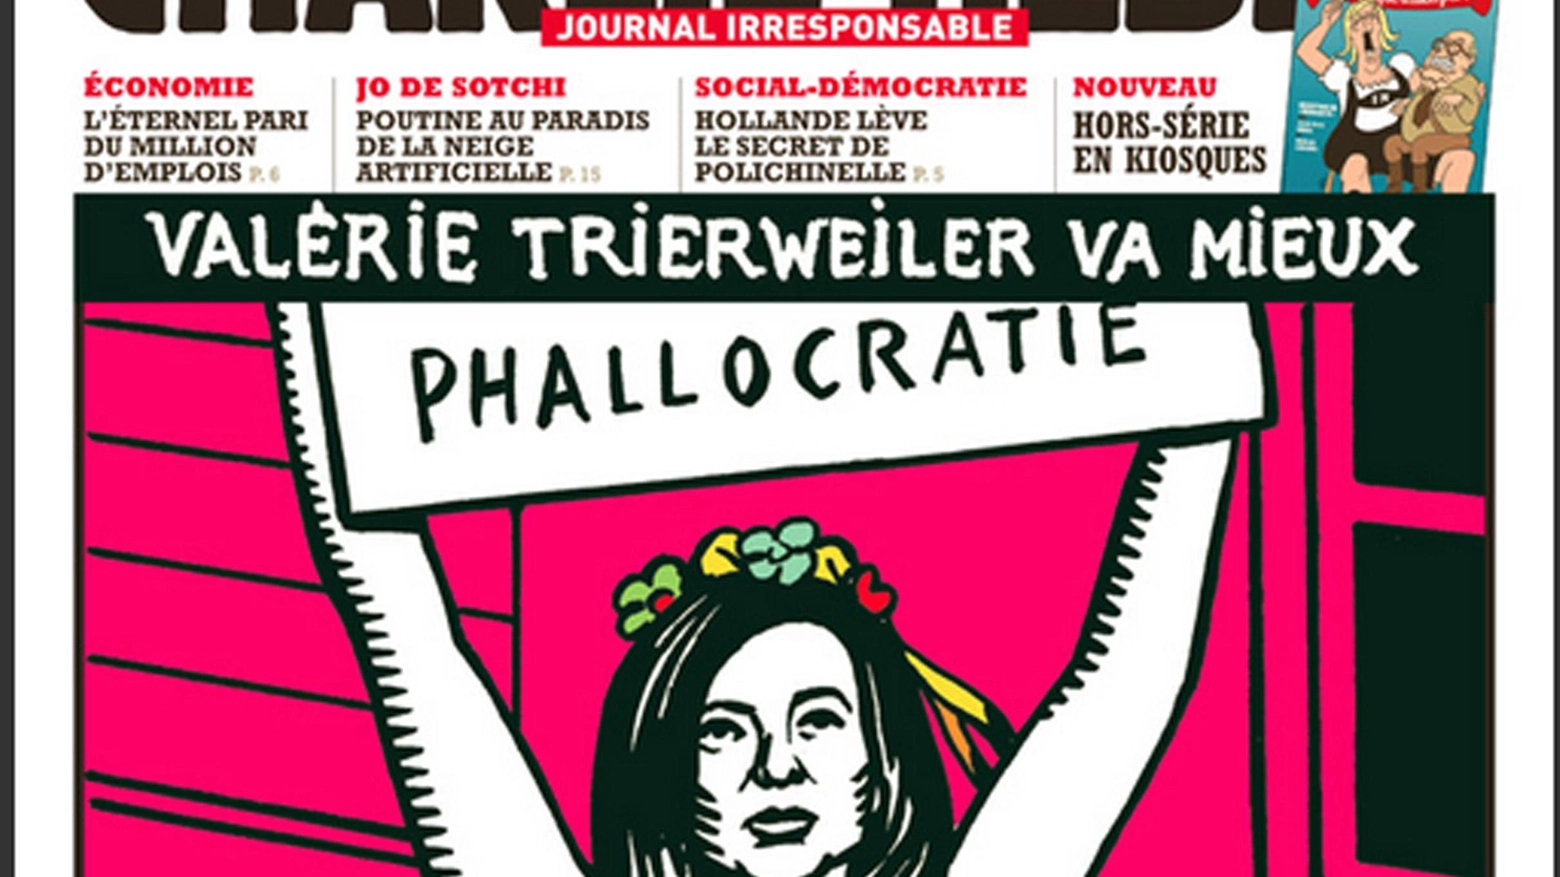 Una copertina del giornale satirico Charlie Hebdo dedicata a Valerie Trierweiler (Ansa)